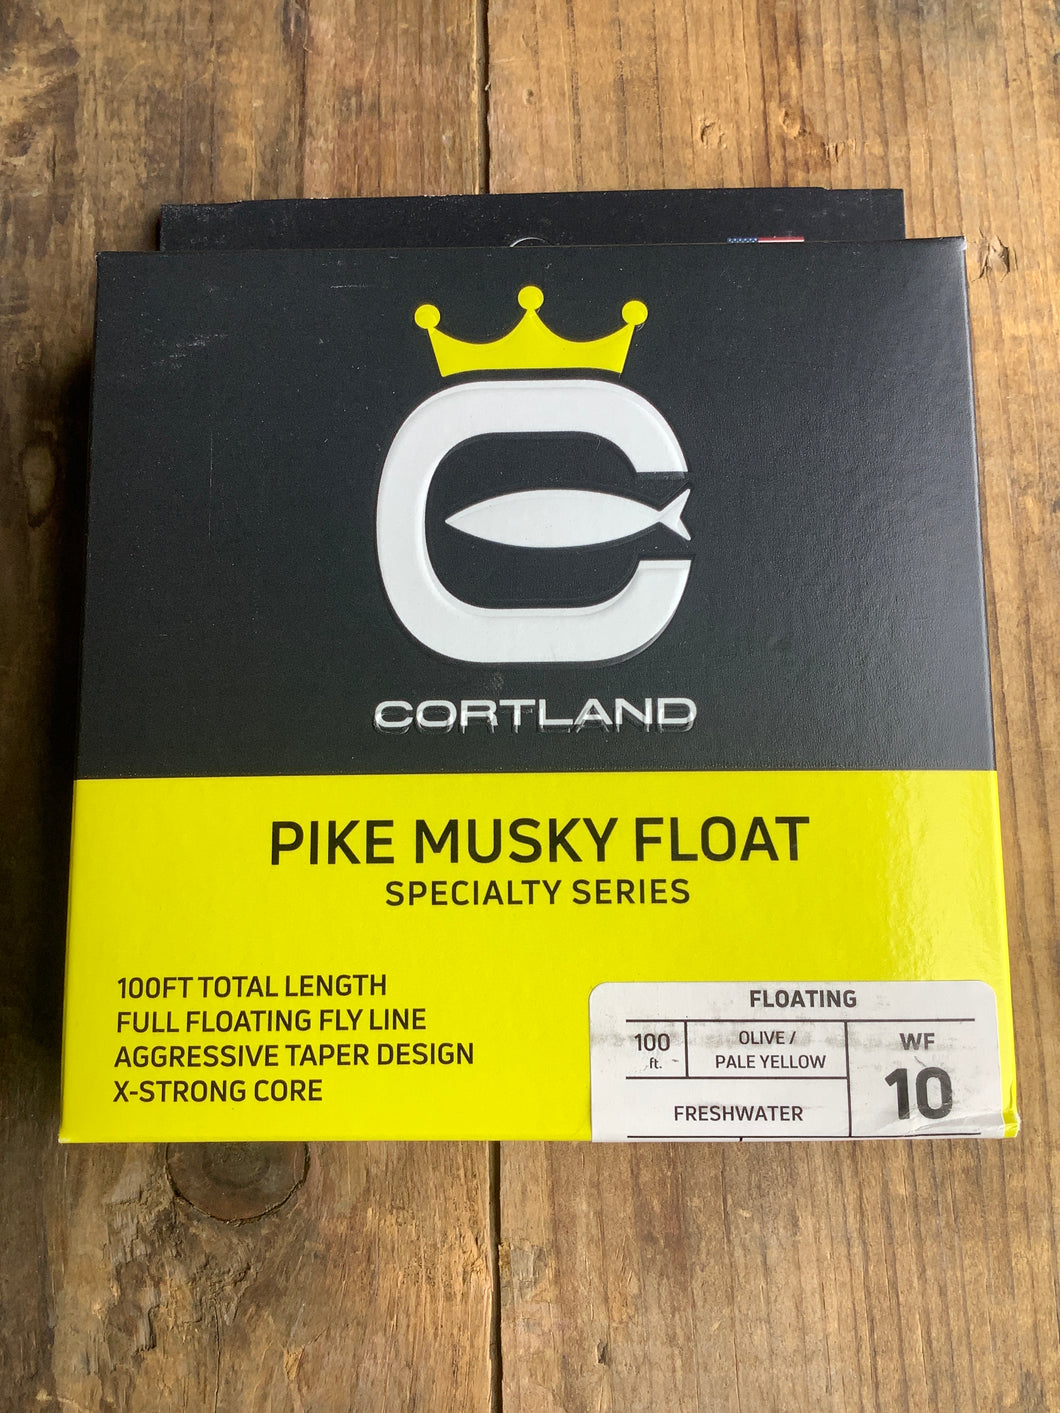 Cortland Pike Musky Specialty Series Fly Line